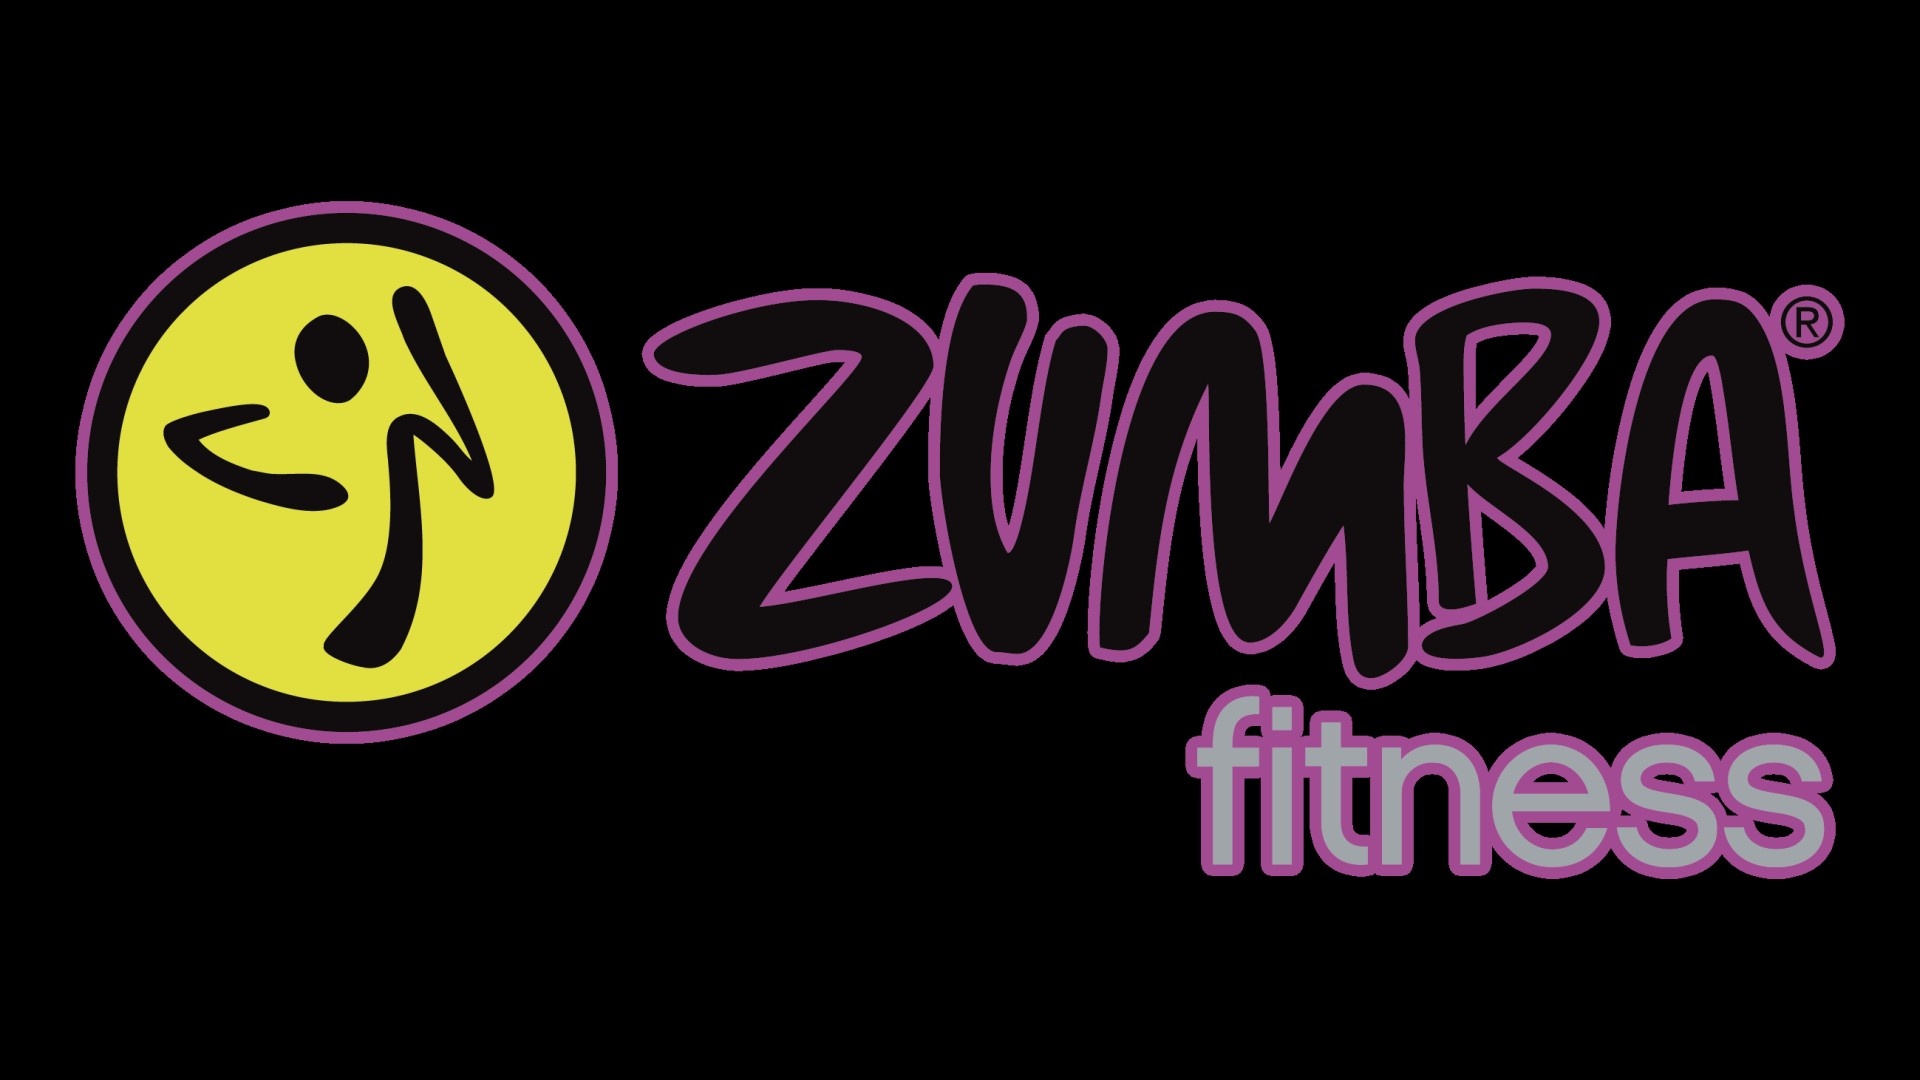 Zumba fitness, Zumba details, Zumba launchbox, Zumba games, 1920x1080 Full HD Desktop